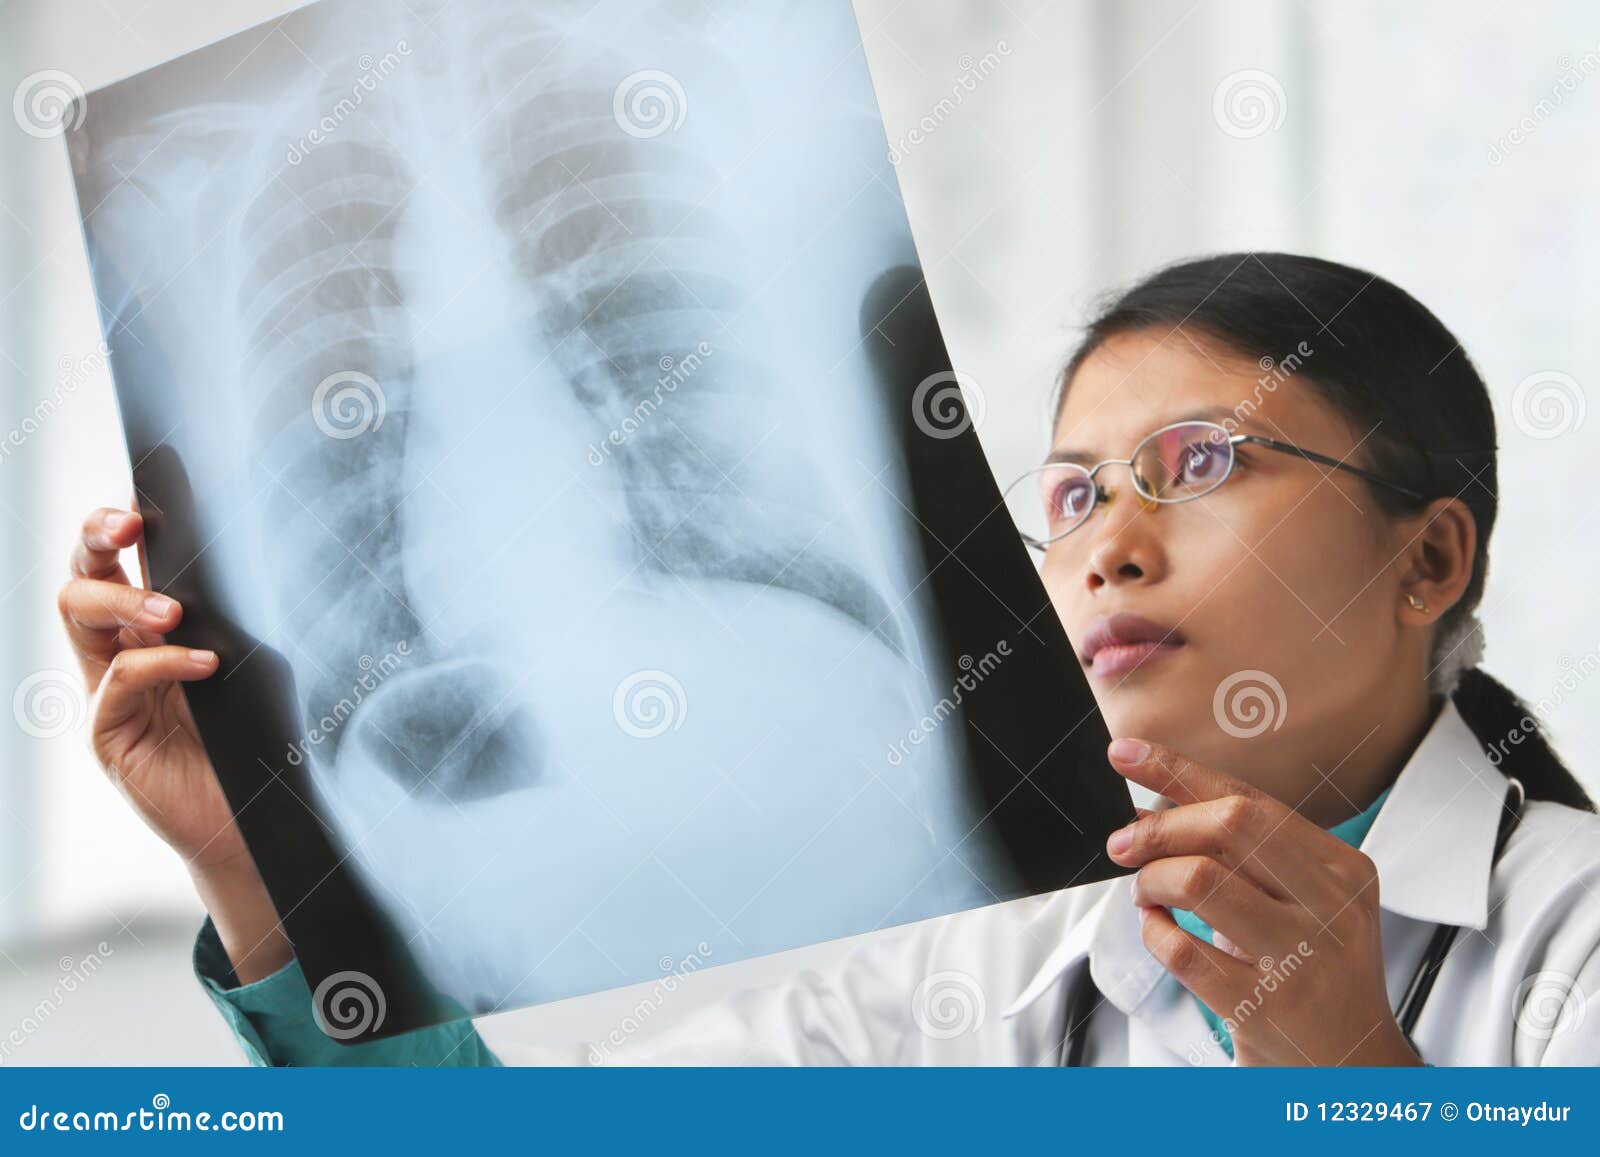 female doctor checking xray image